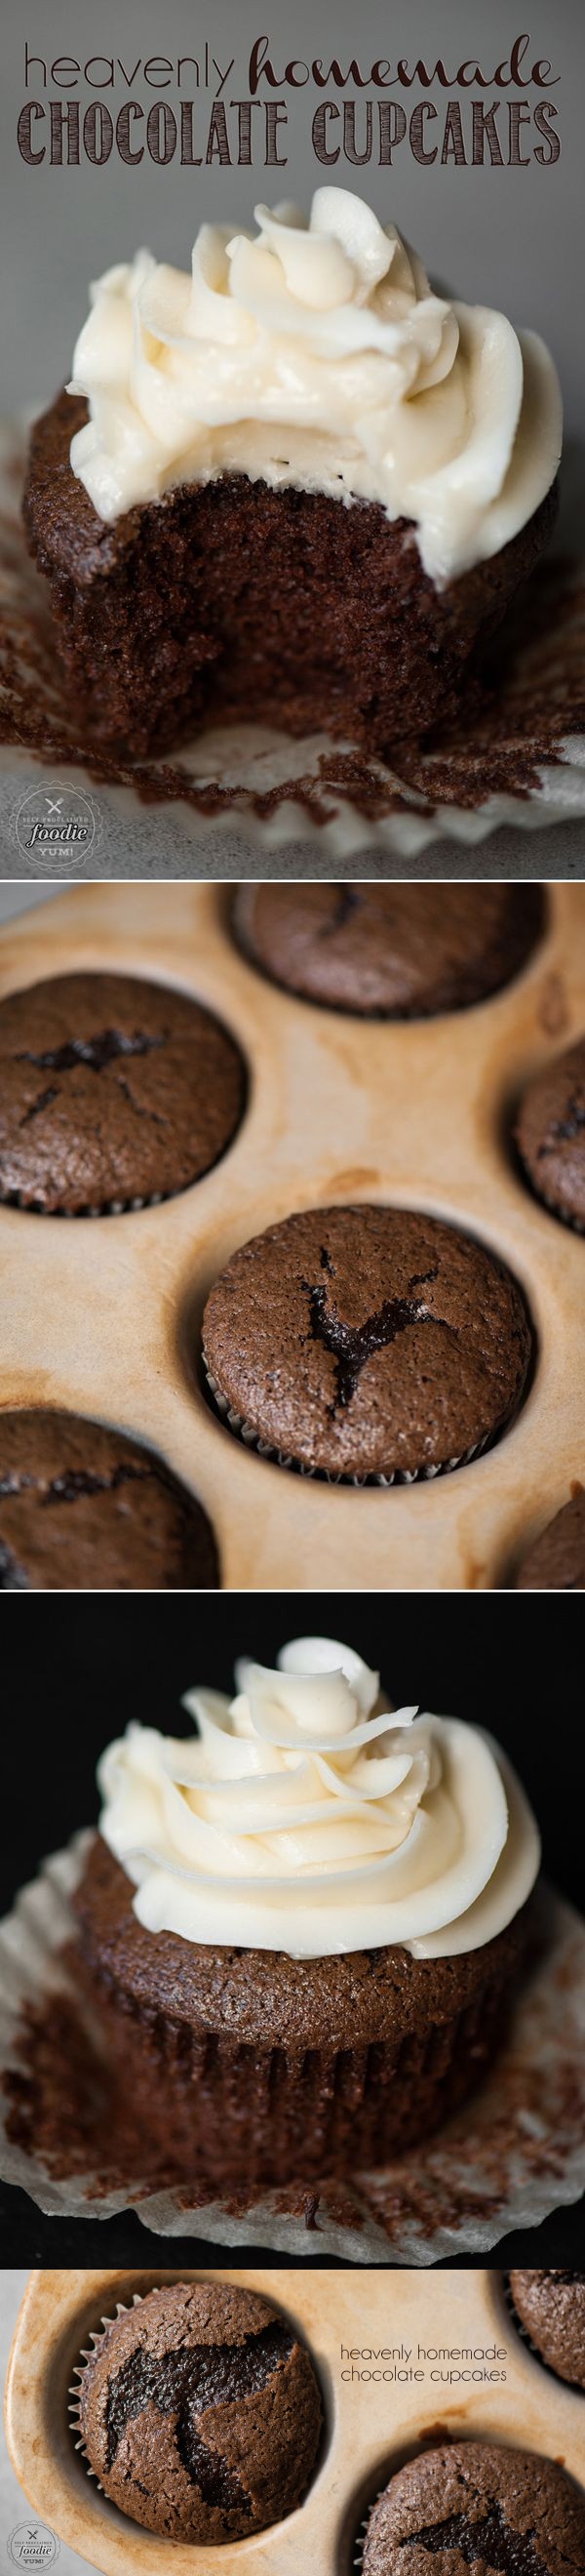 Heavenly Homemade Chocolate Cupcakes